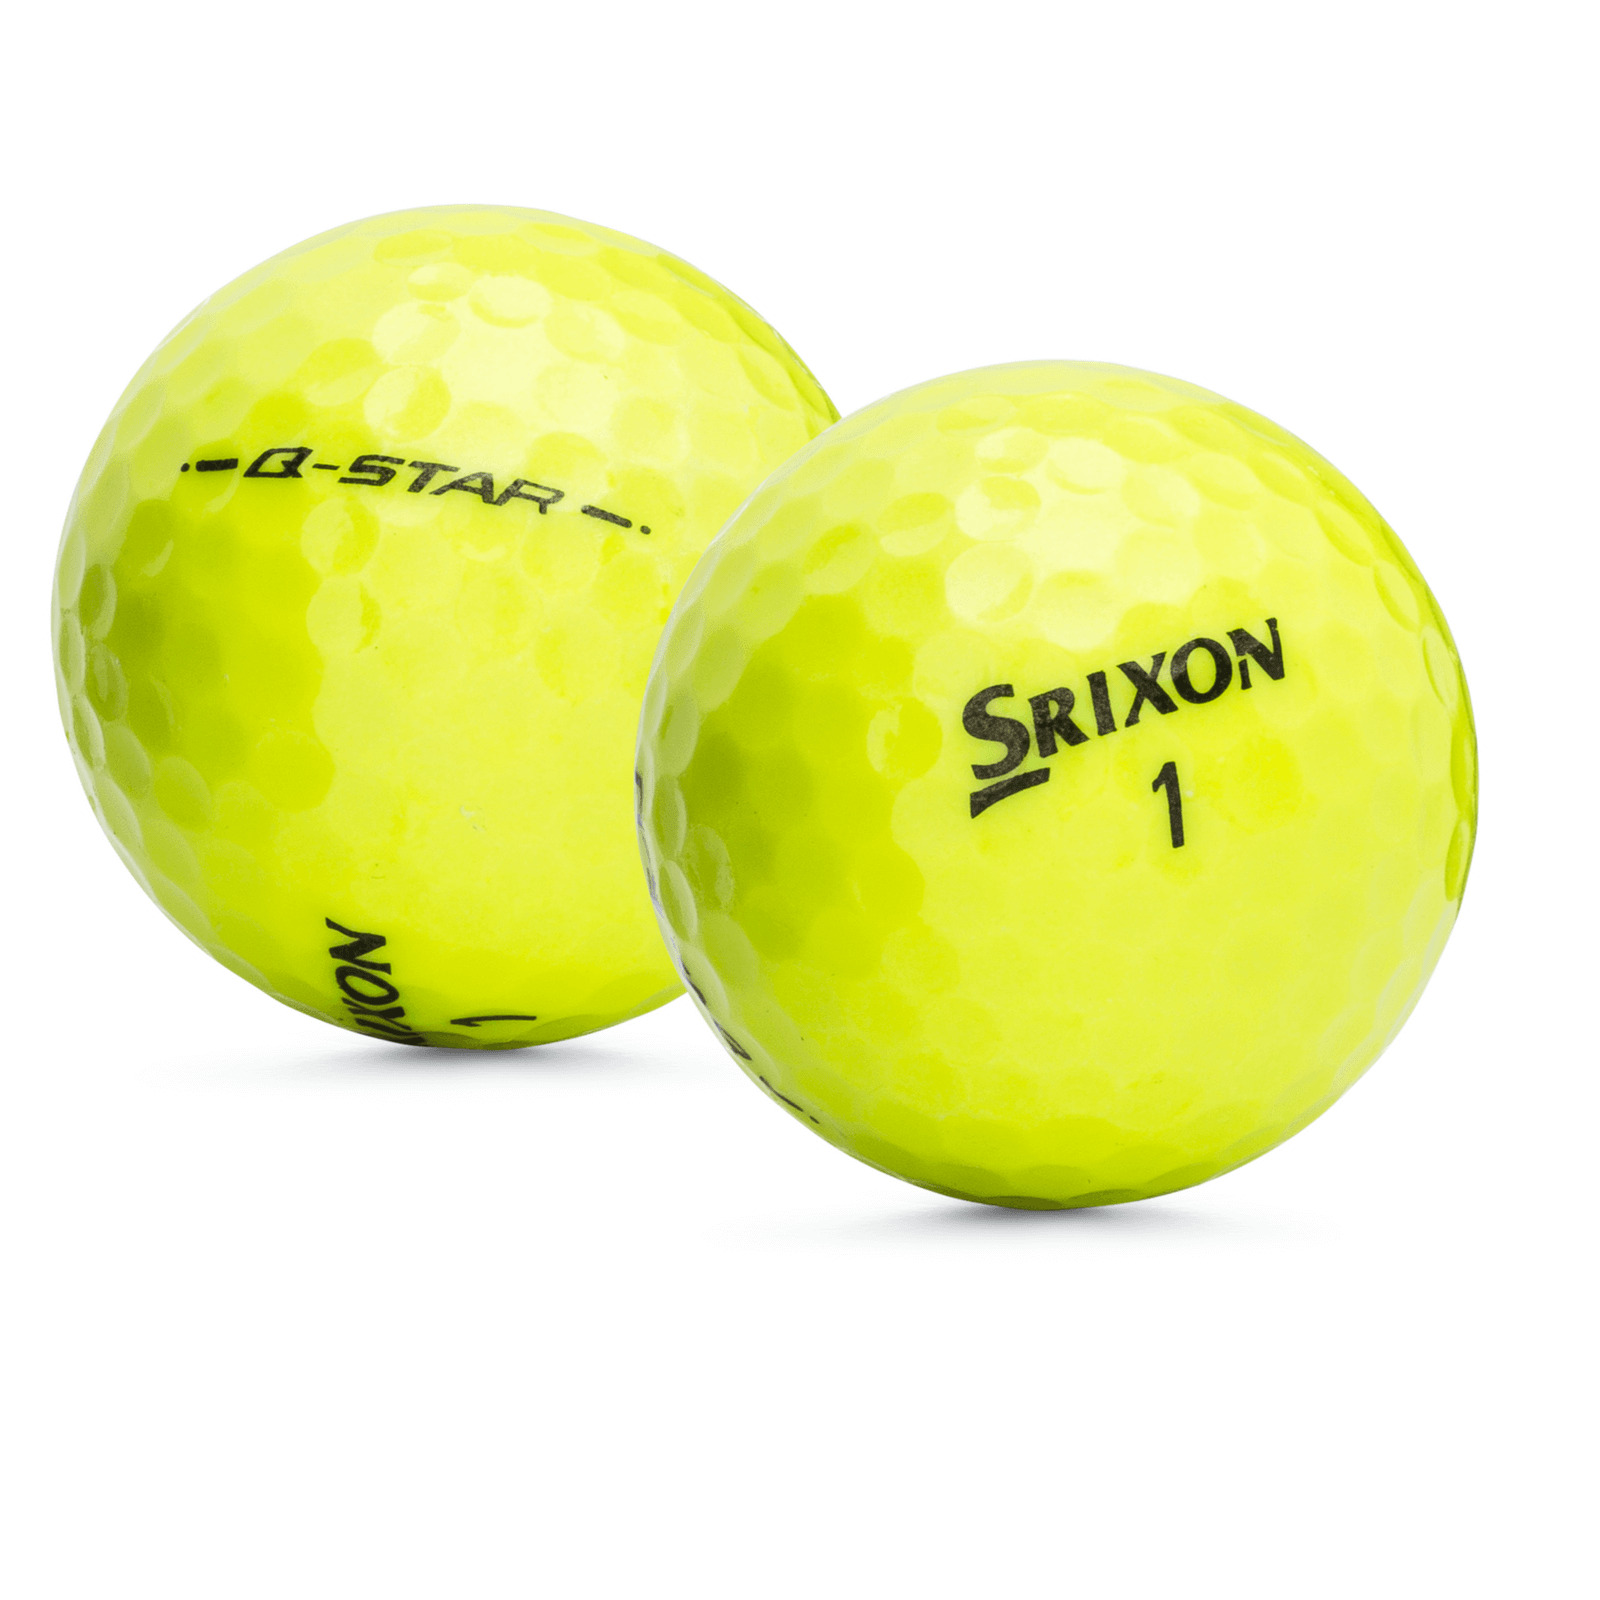 Srixon Q-Star Mix Mint Recycled Used Golf Balls, Yellow - 48 Count